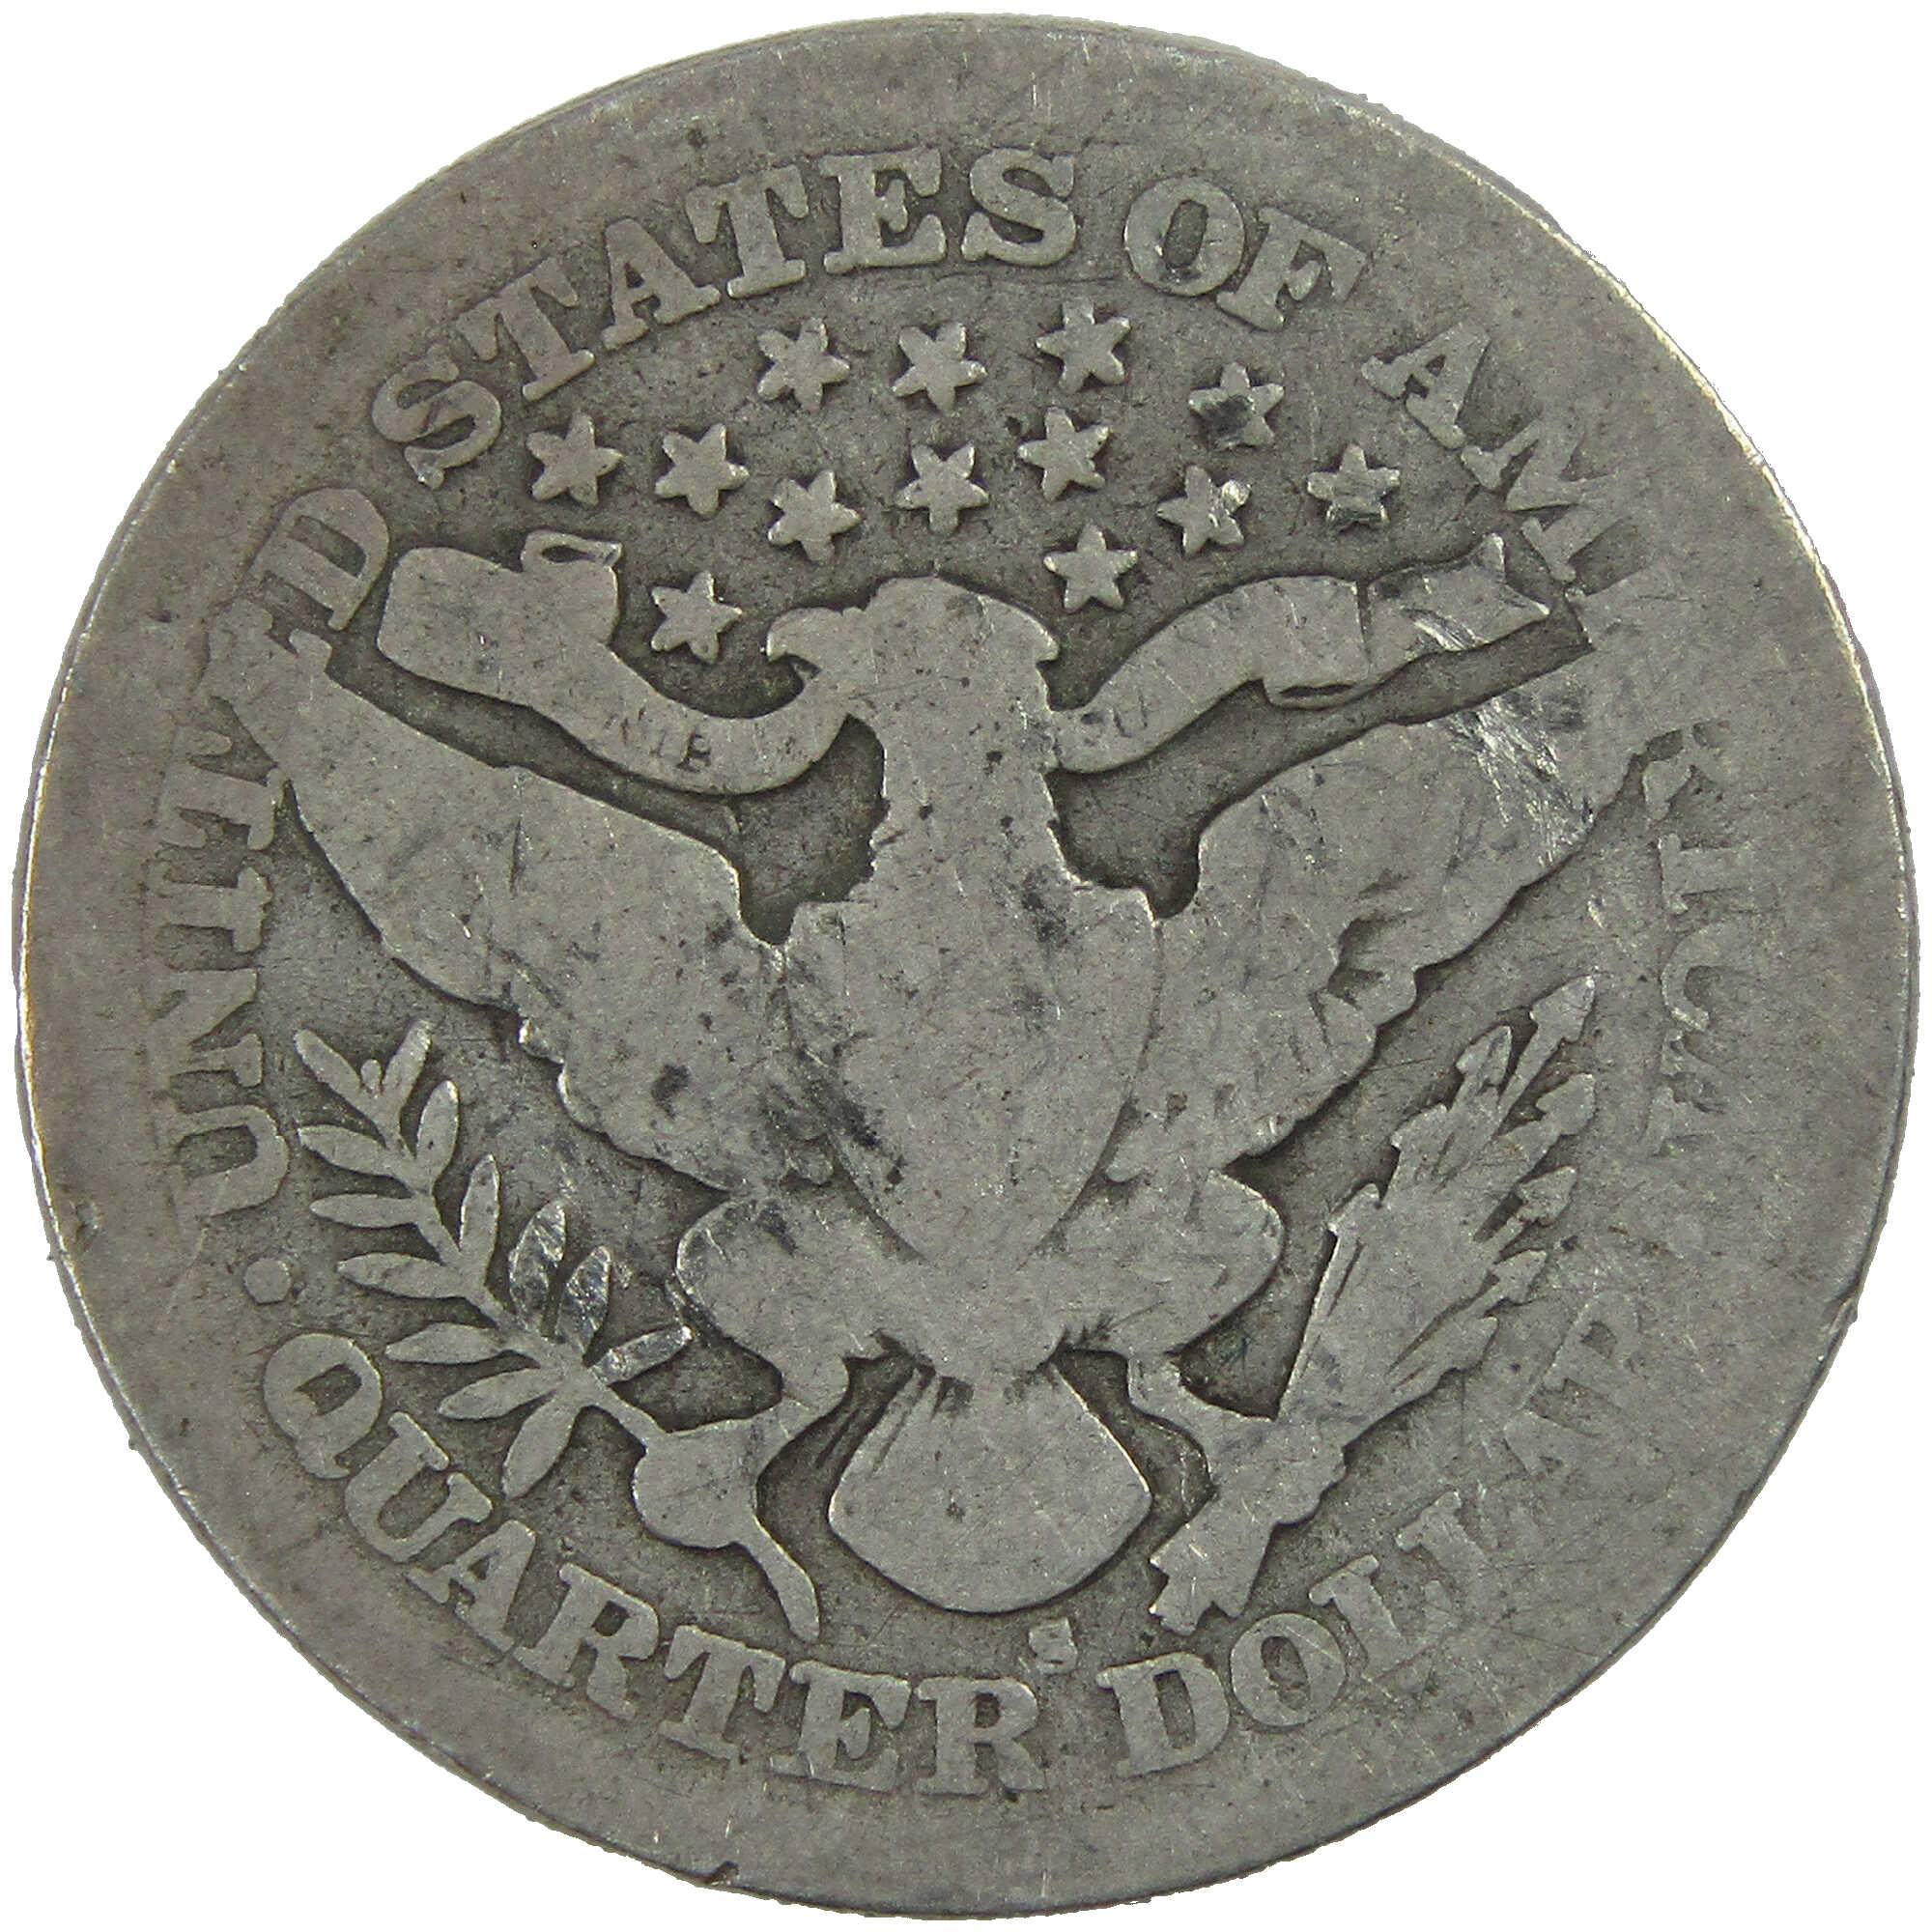 1909 S Barber Quarter AG About Good Silver 25c Coin SKU:I12697